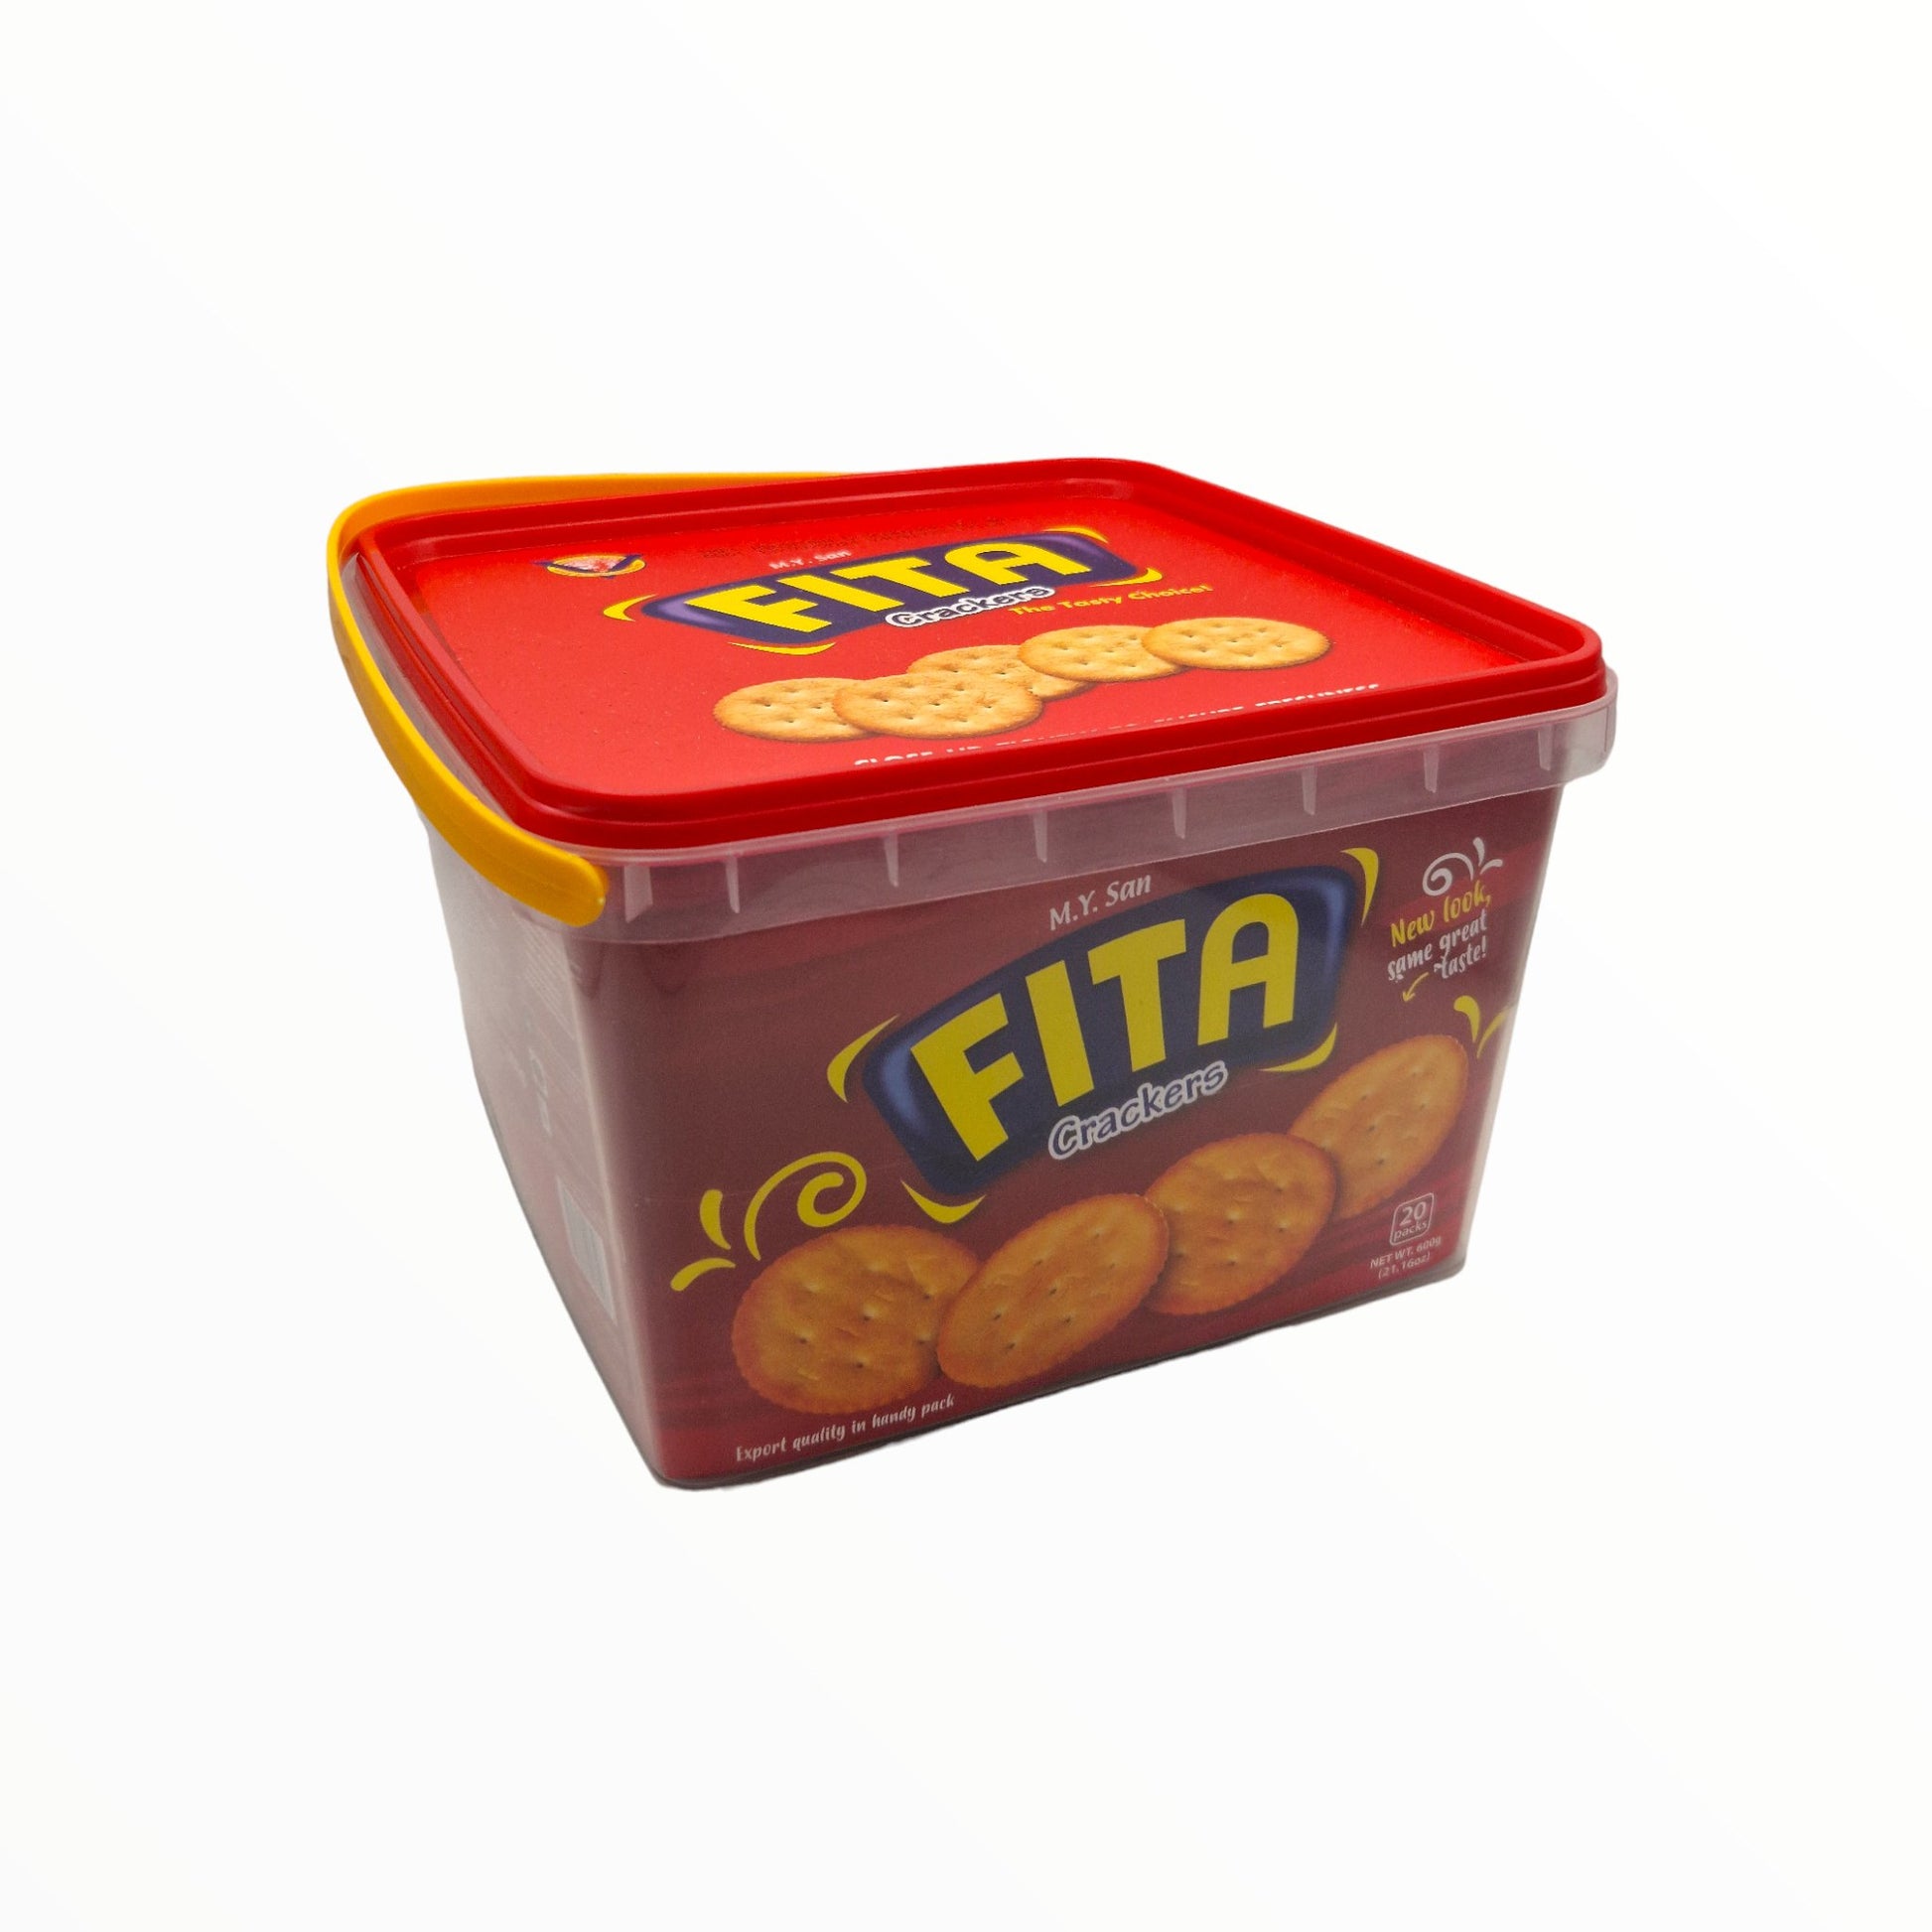 Fita Crackers 600g - Mabuhay Pinoy Asia Shop